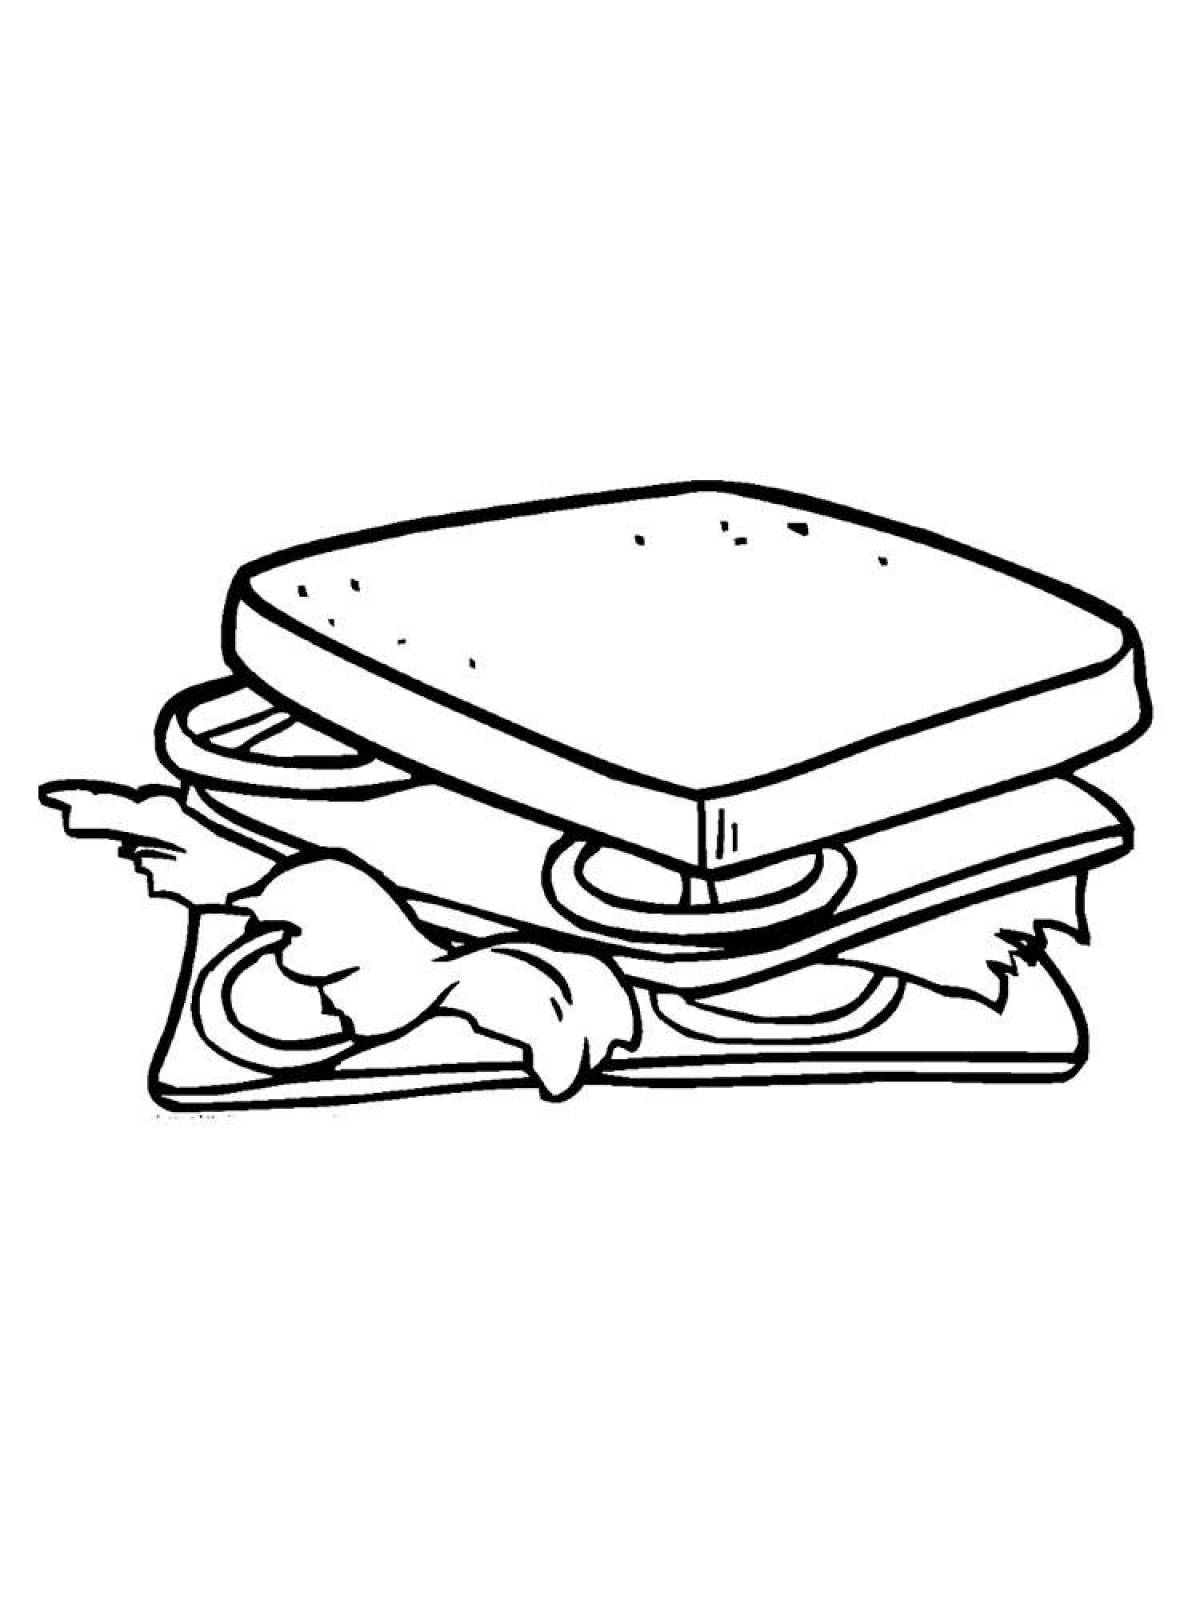 Бутерброд рисунок поэтапно